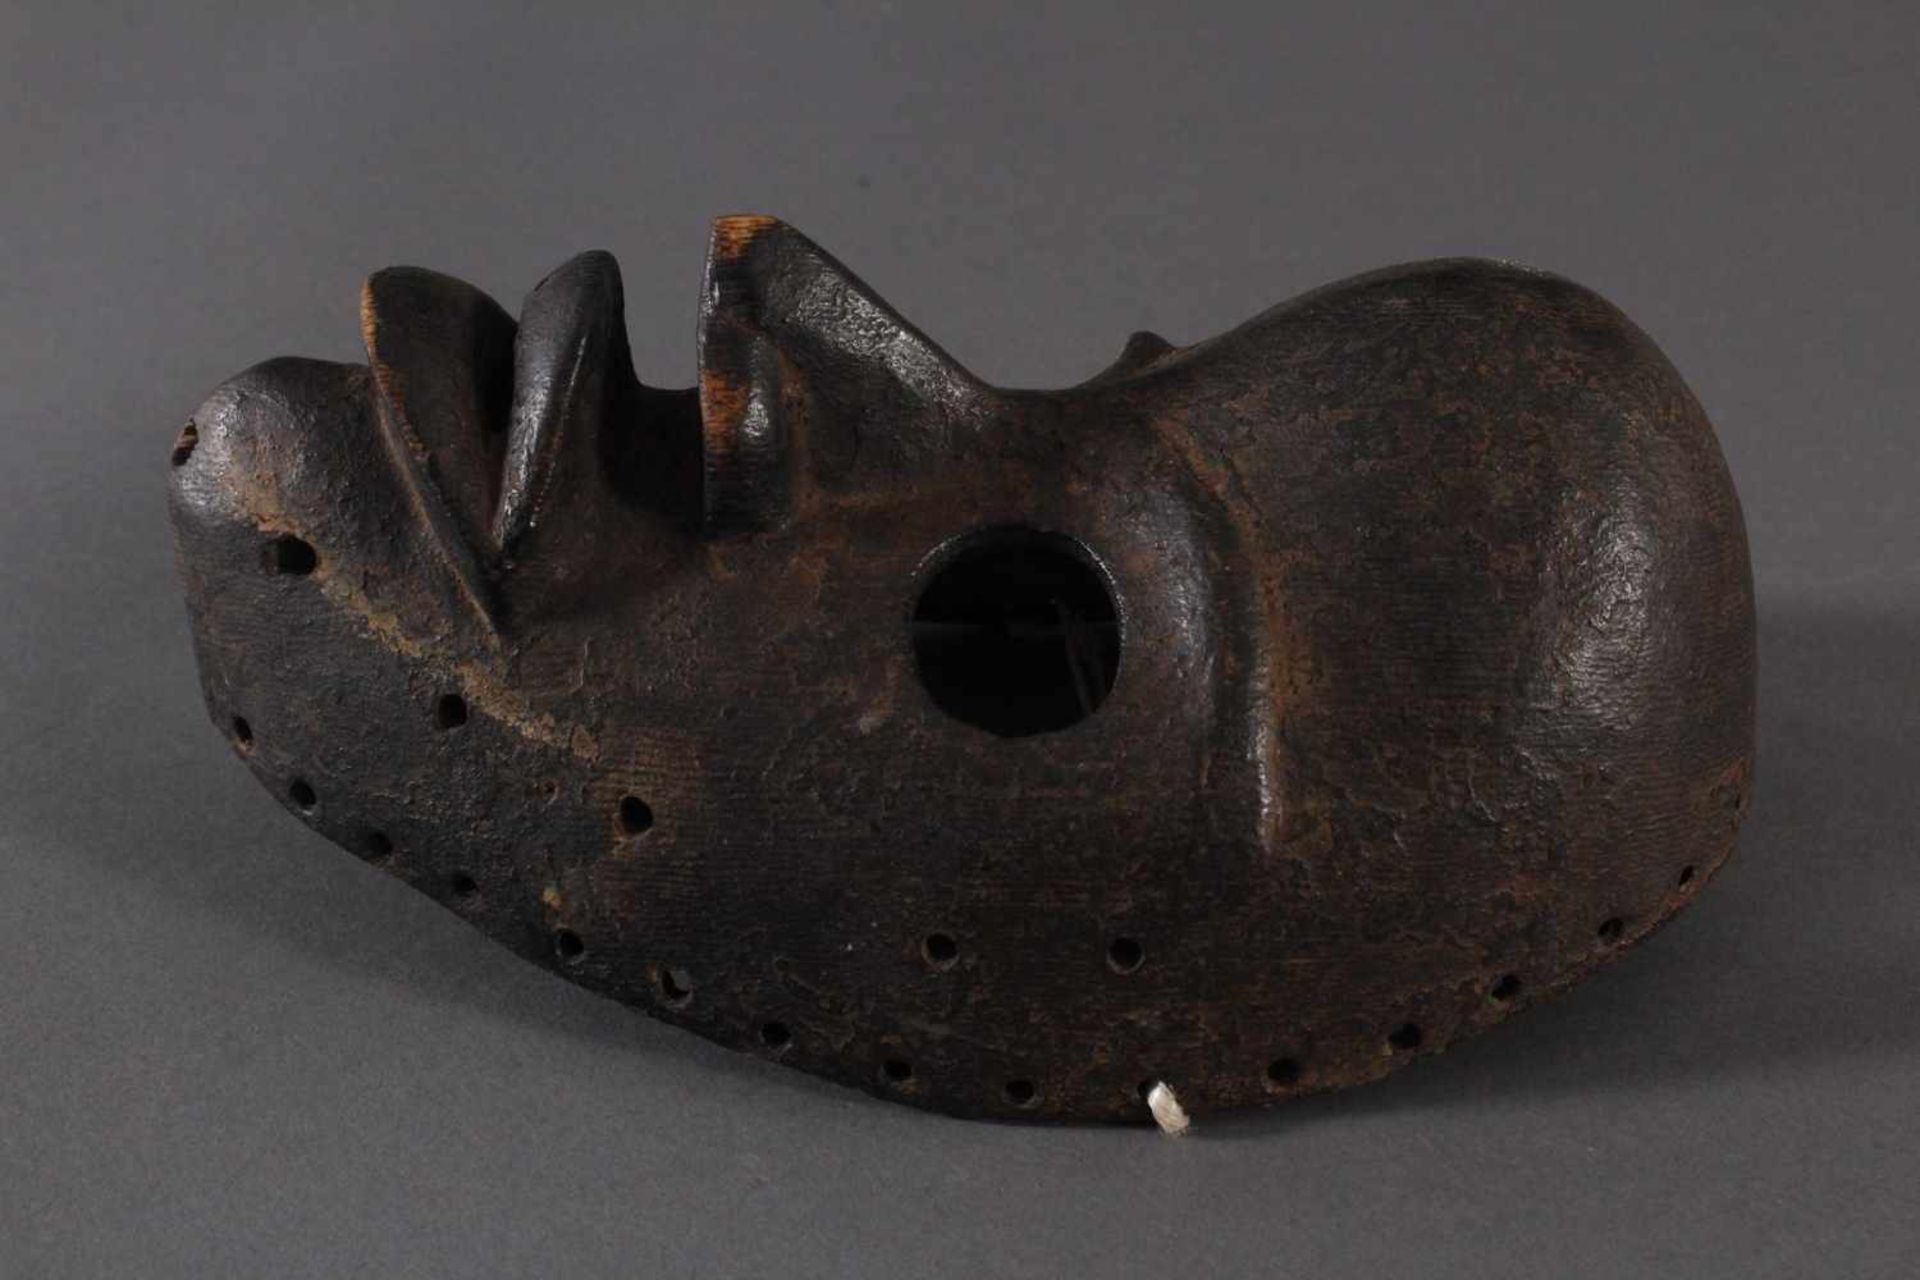 Antike Maske, Dan, Liberia. "Feuermelder", 1. Hälfte 20. Jh.Holz geschnitzt, dunkle Patina, - Bild 3 aus 6